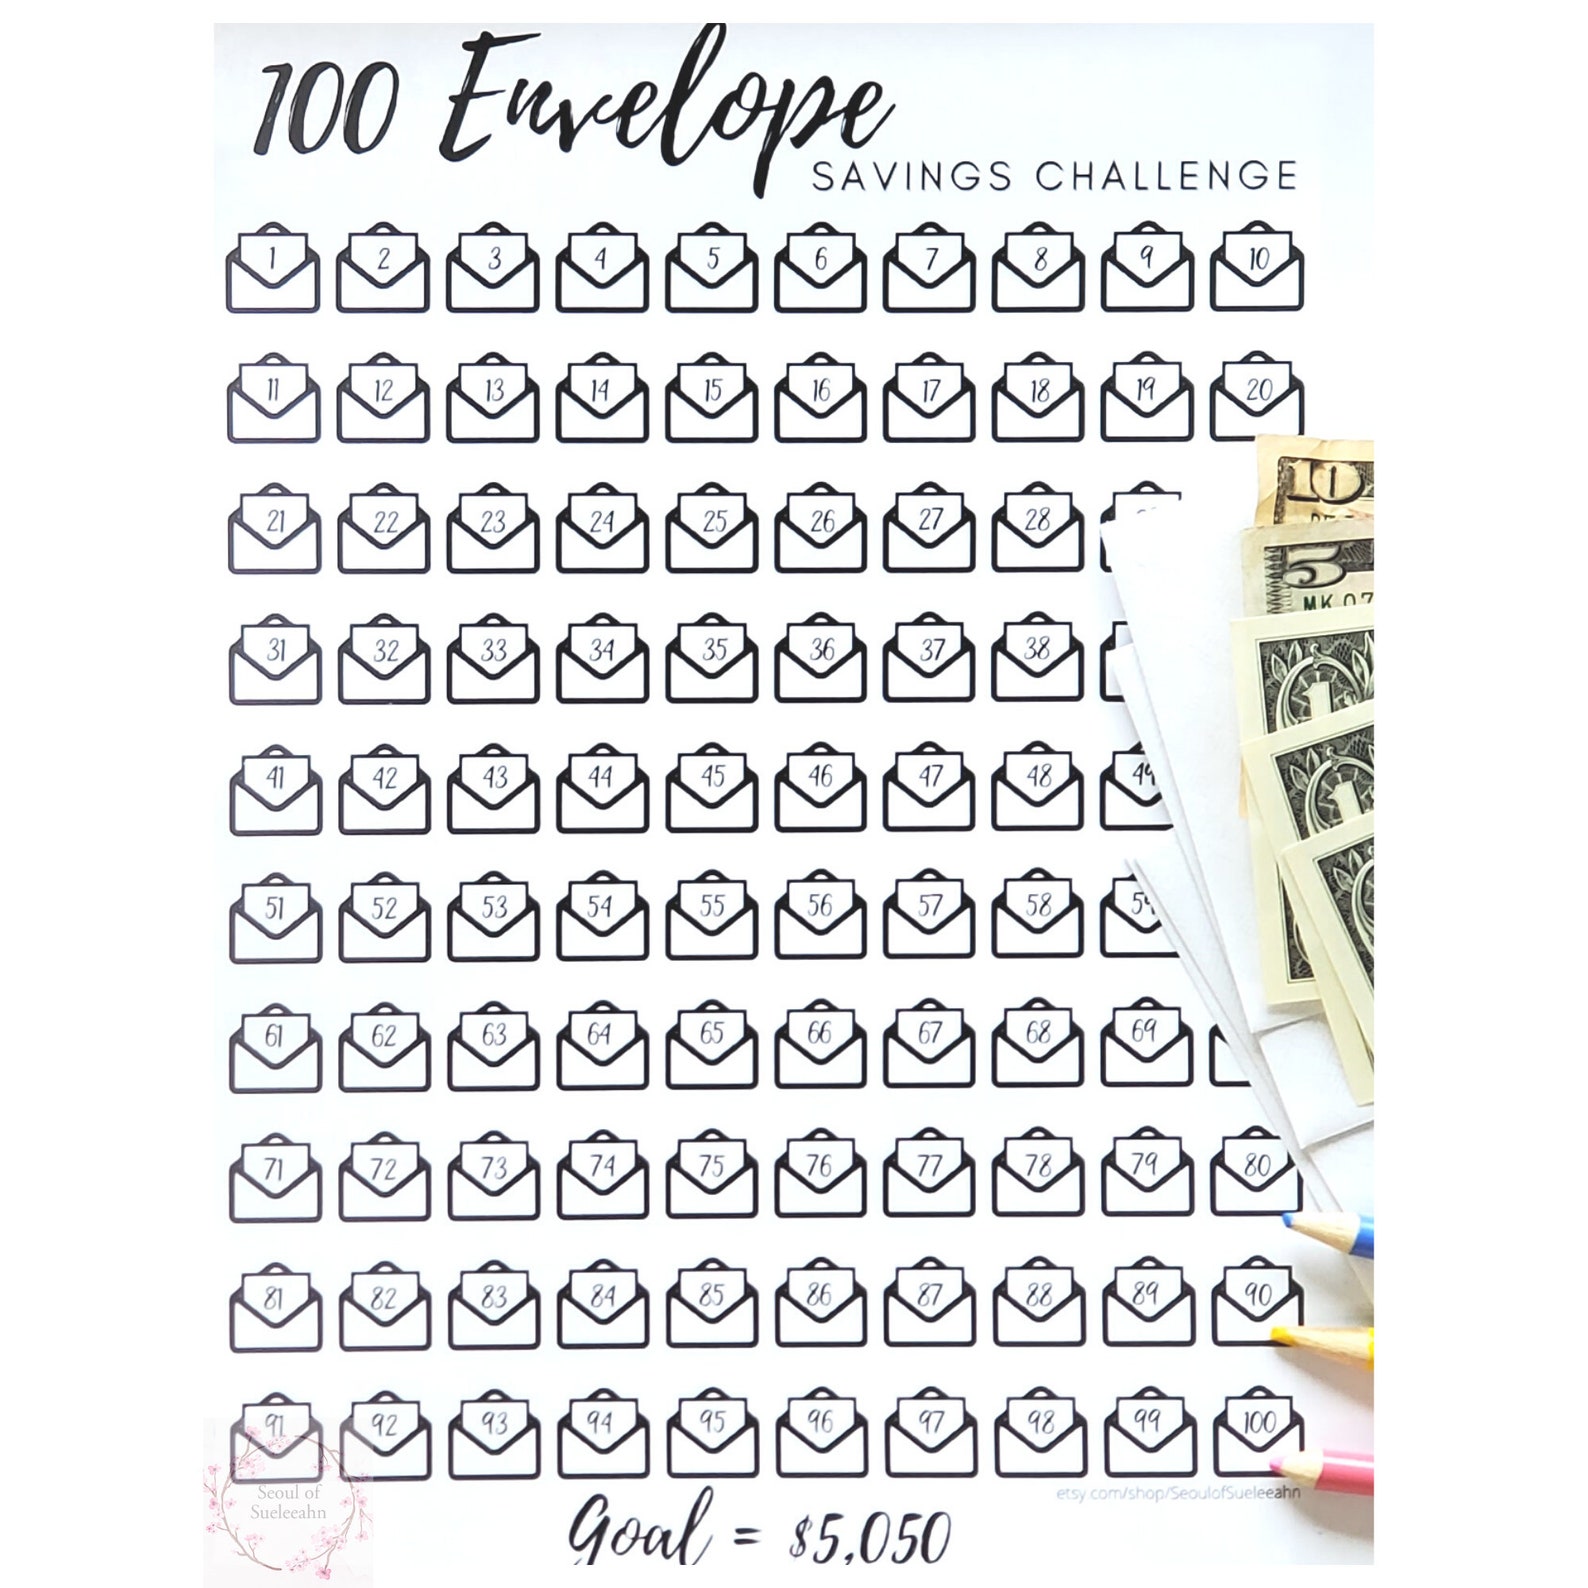 100-envelope-challenge-tracker-pdf